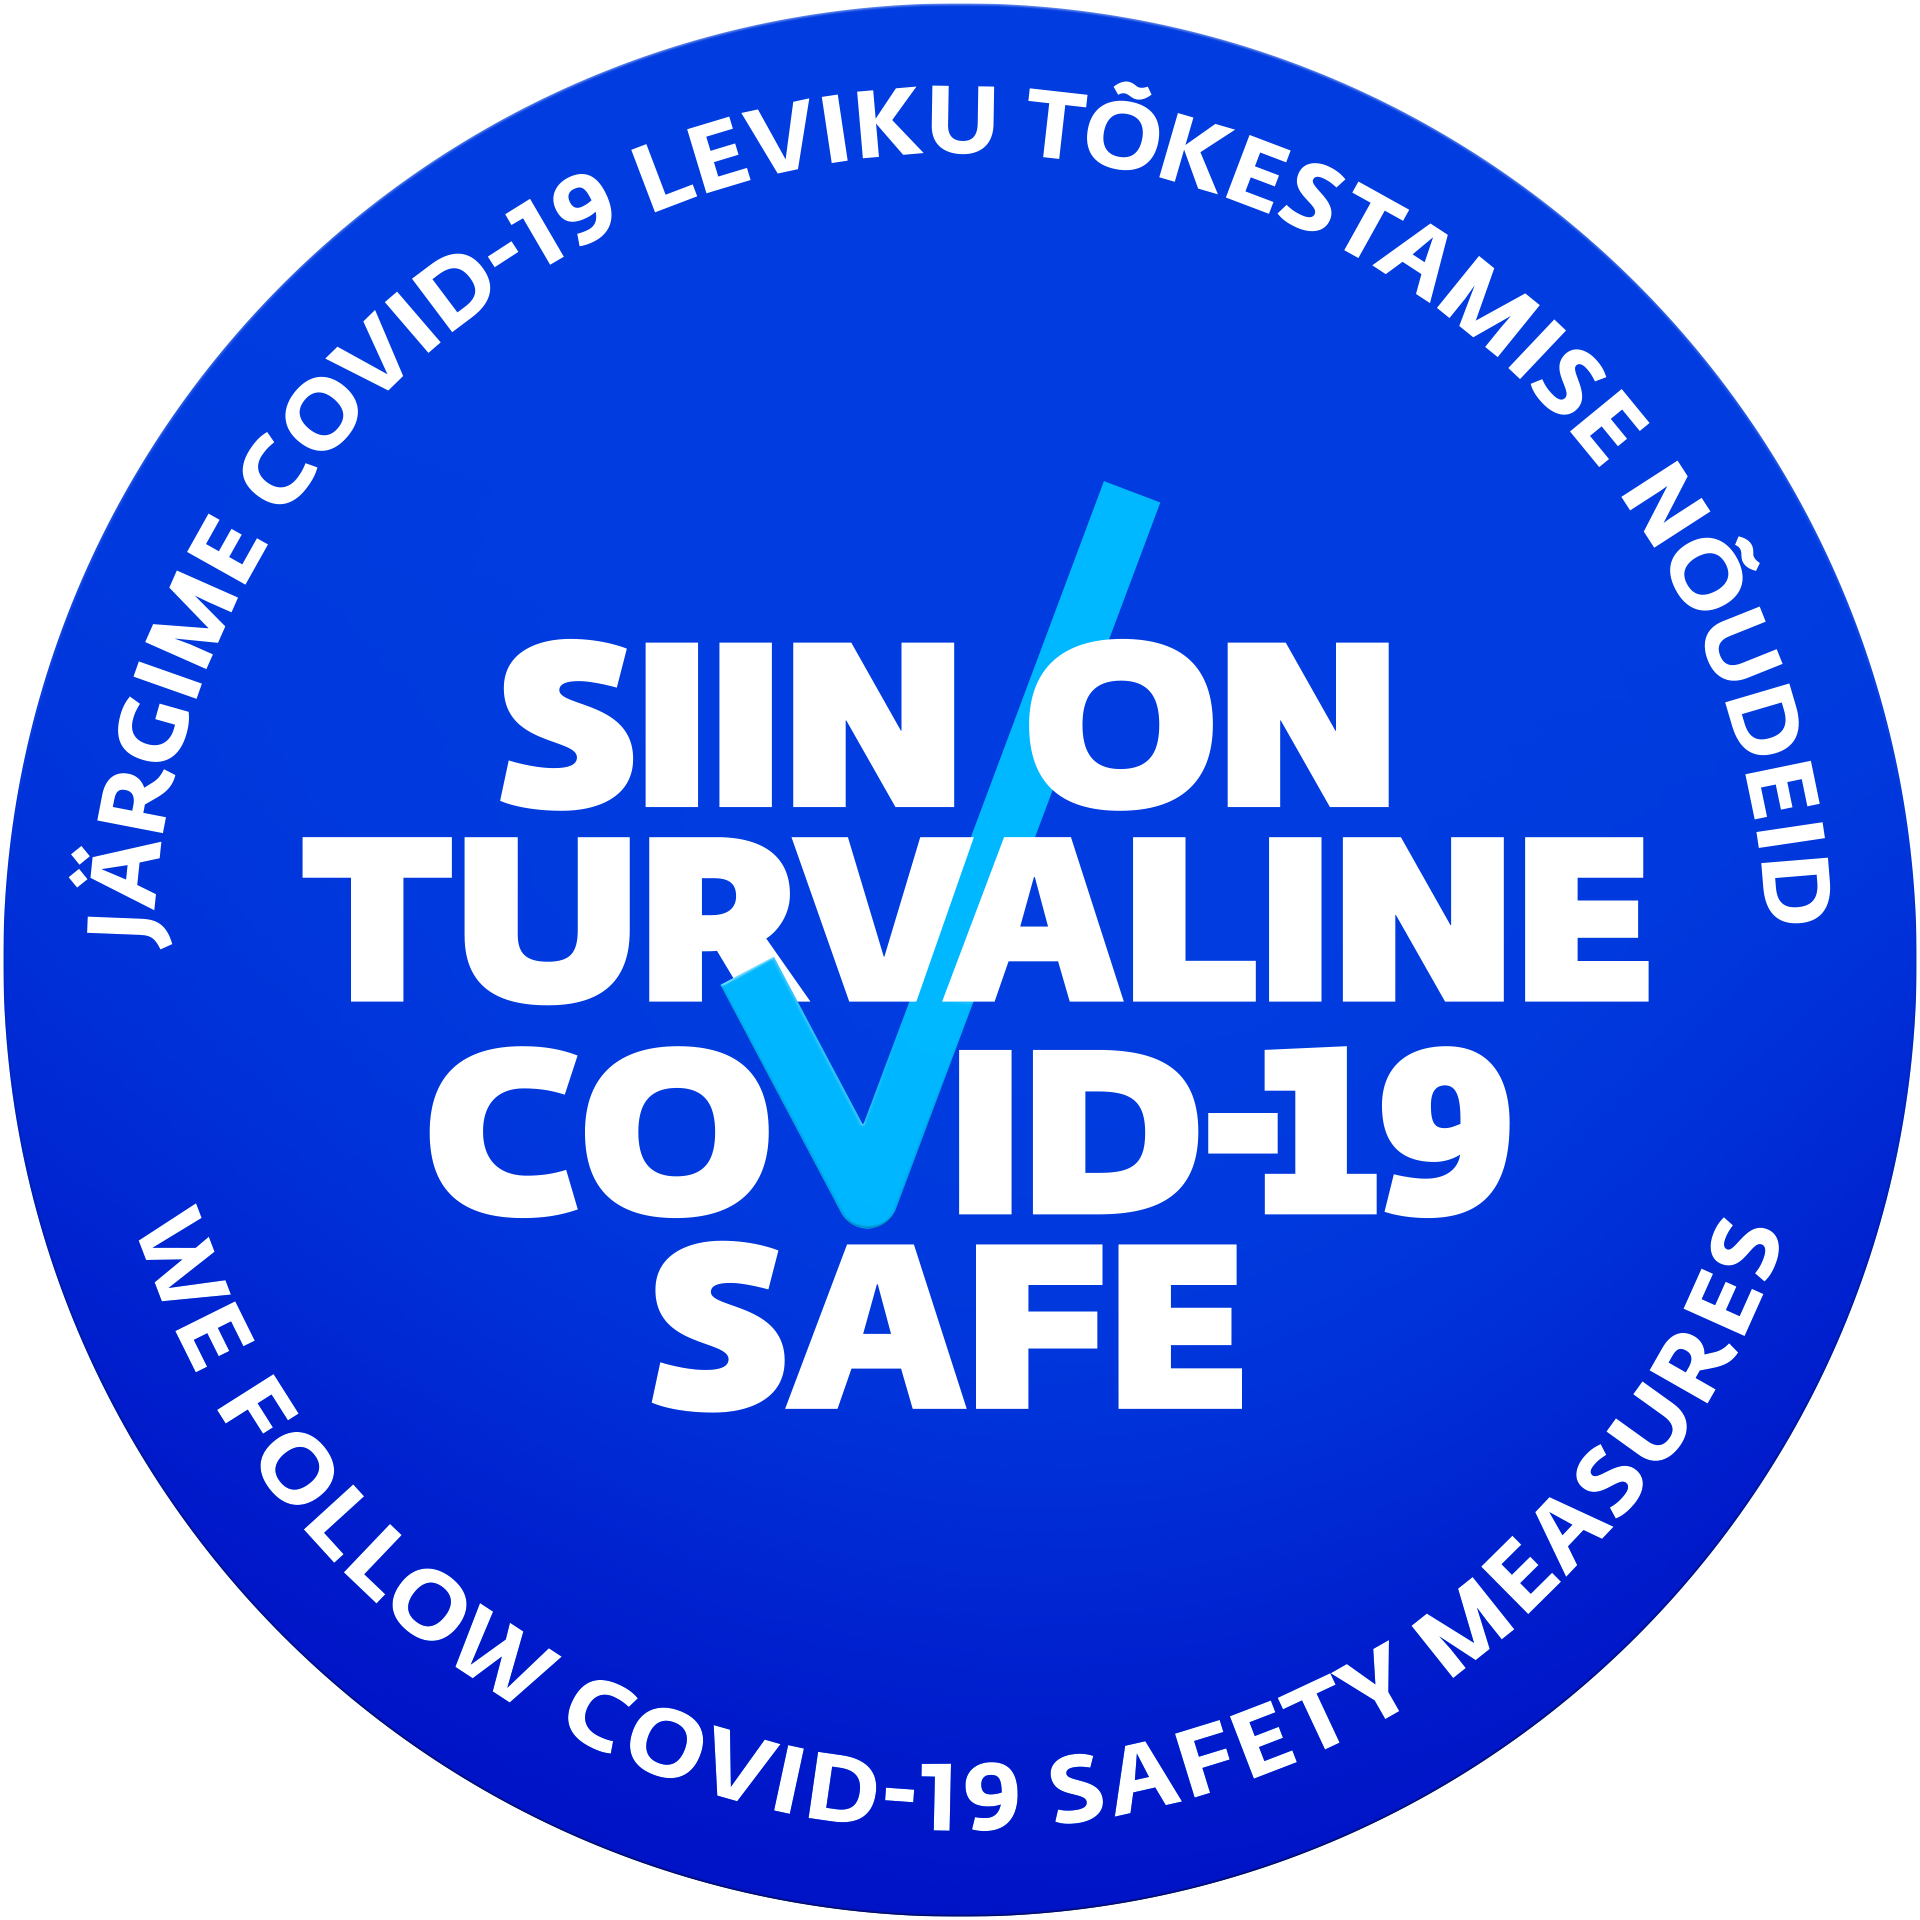 Covid-19 safe